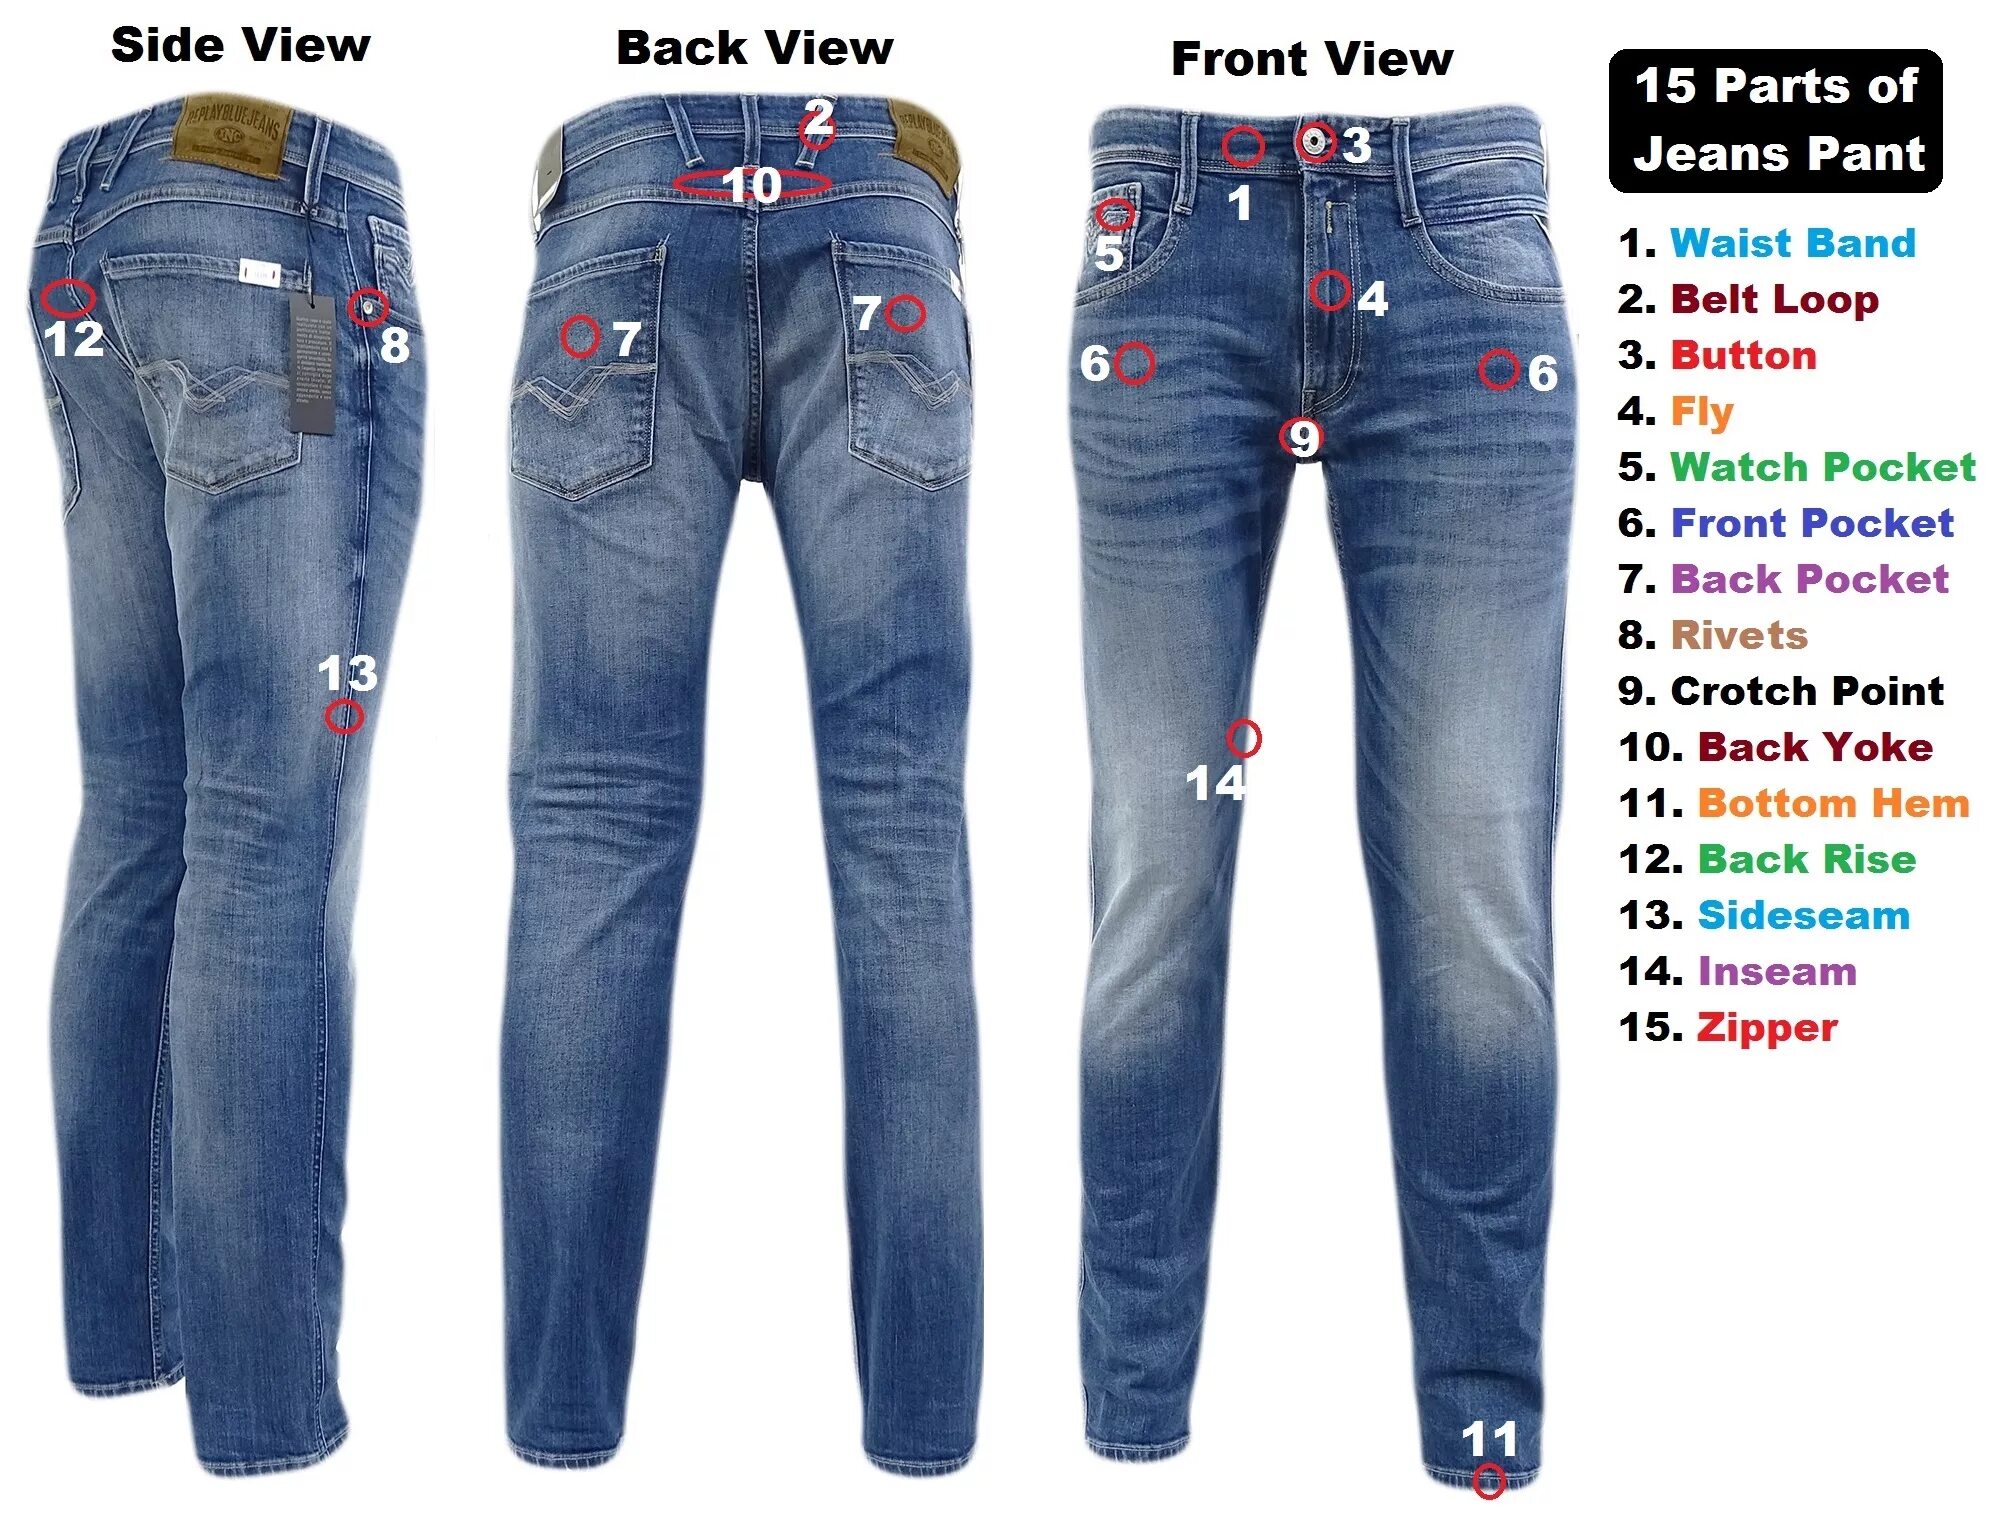 Parts of Jeans. Detail Denim джинсы. Карточки New Jeans. Джинсы ariat Trouser.